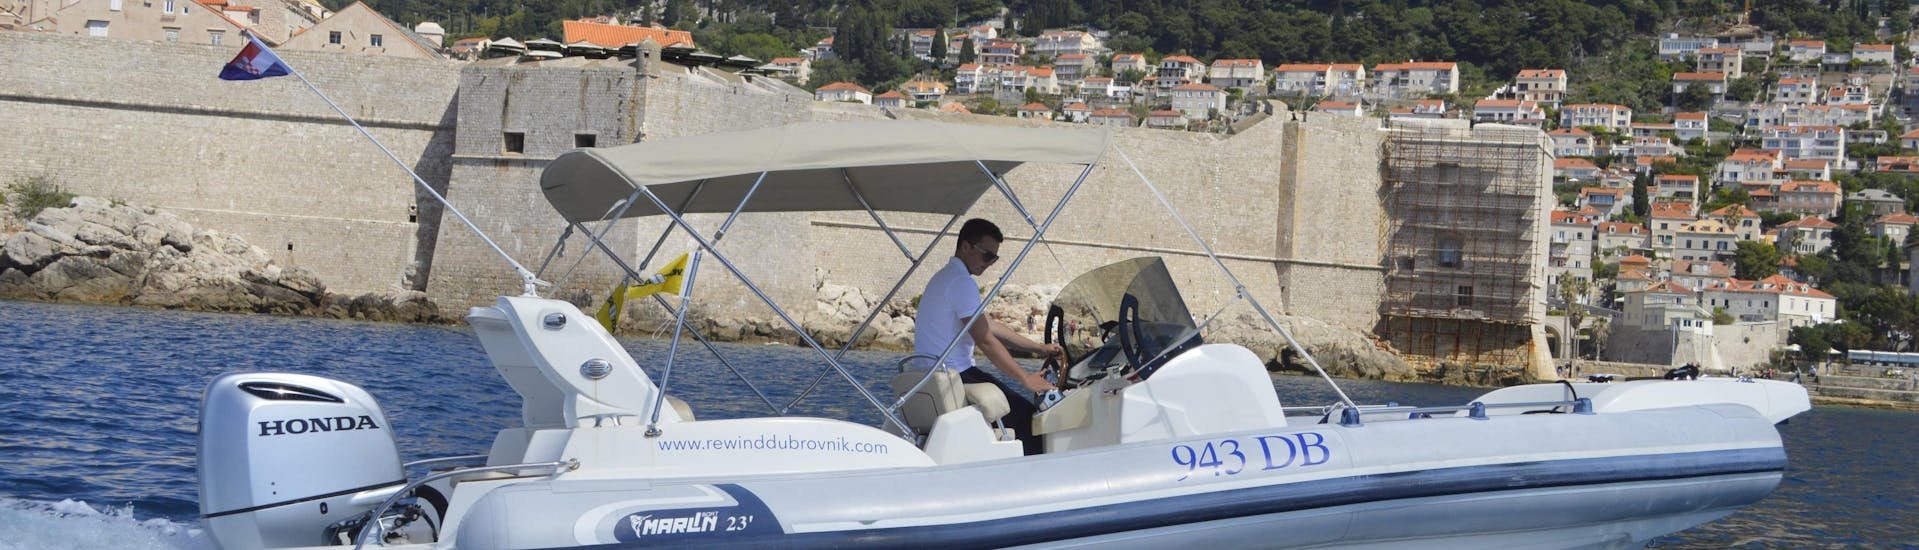 Balade privée en bateau Dubrovnik - Korčula avec Baignade & Observation de la faune.